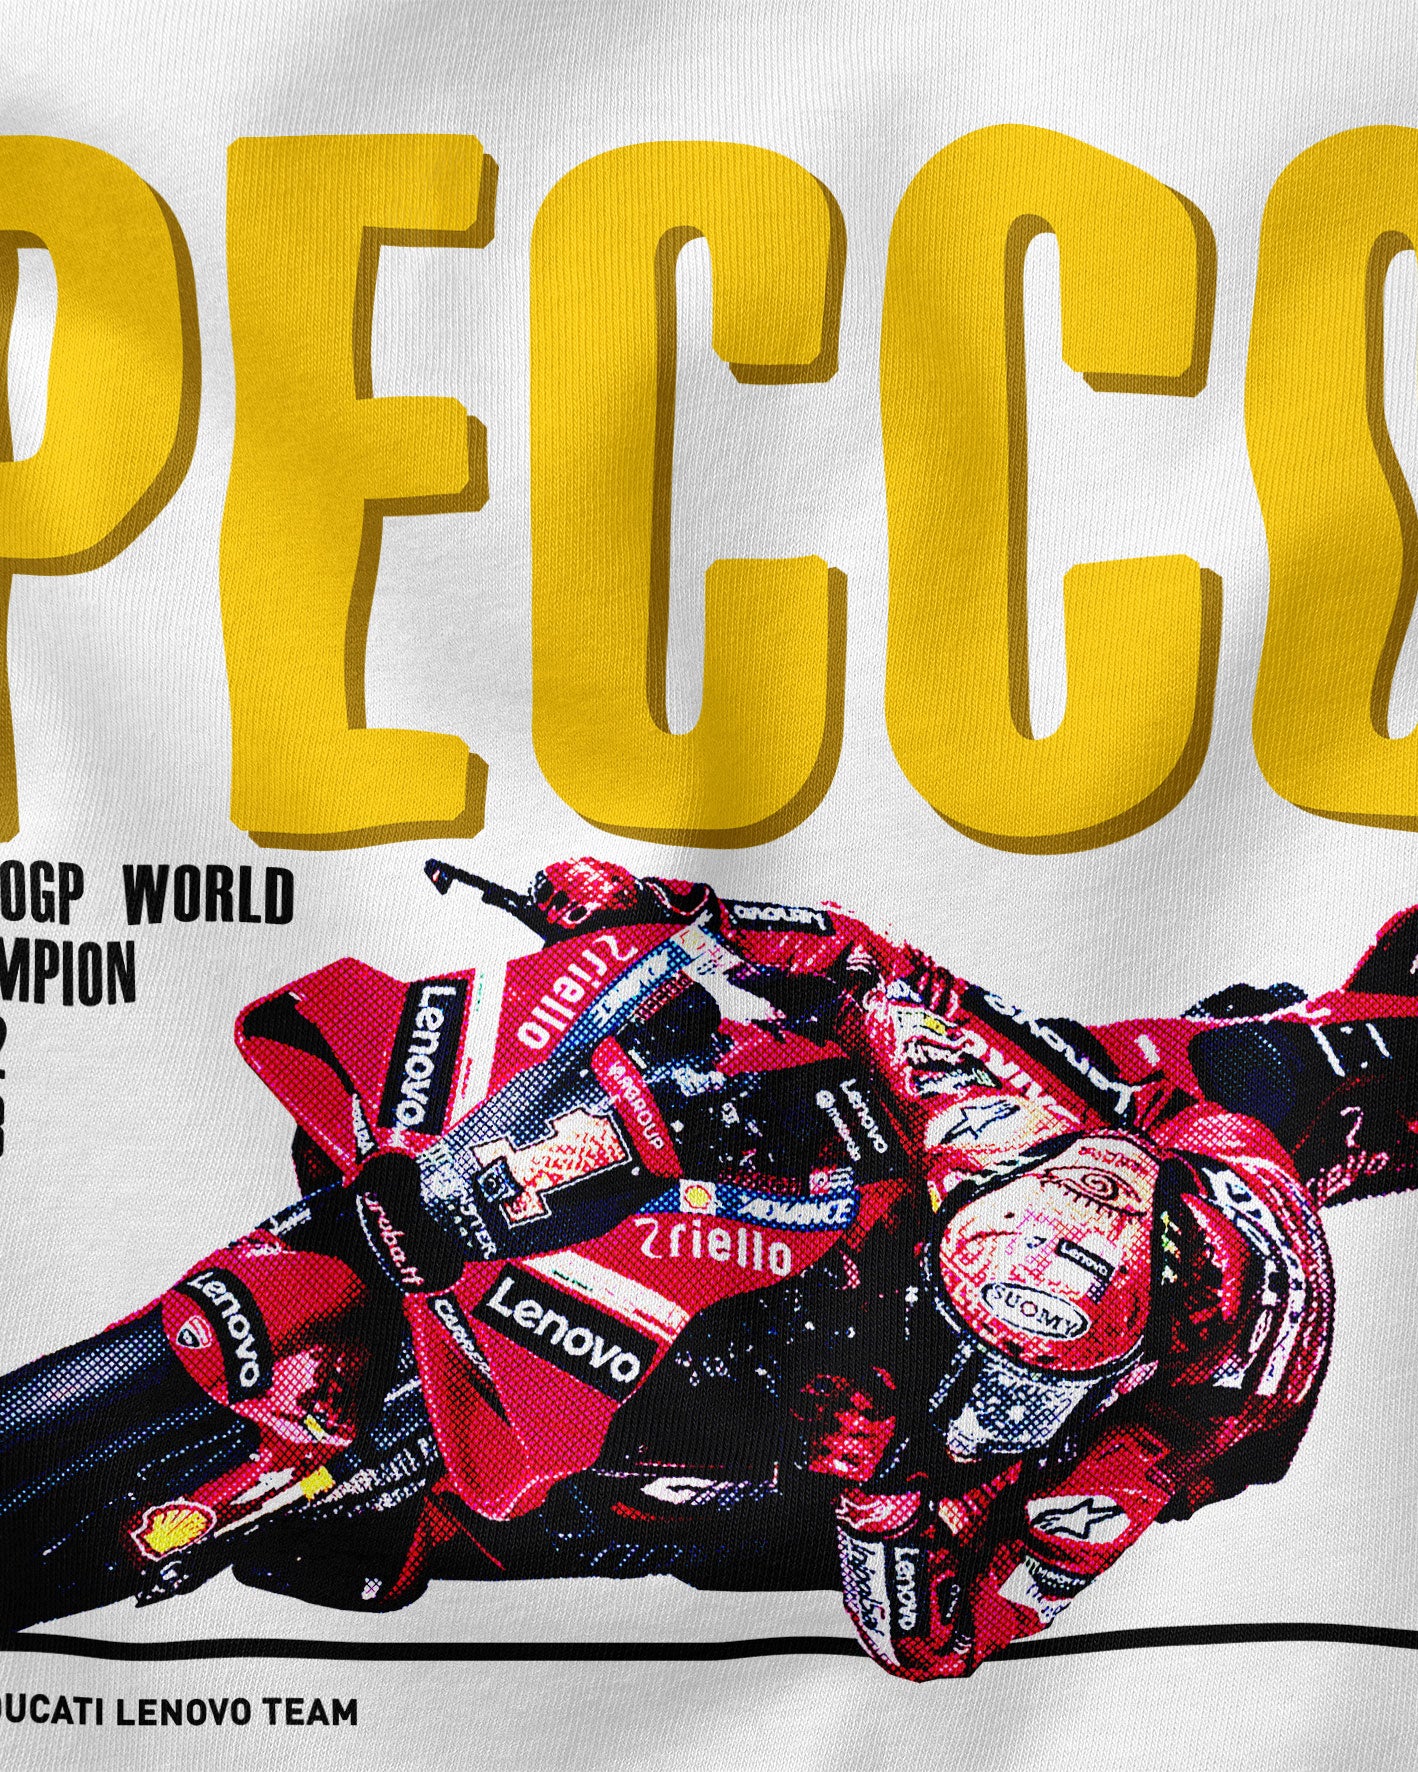 Camiseta Pecco Moto GP World Champion